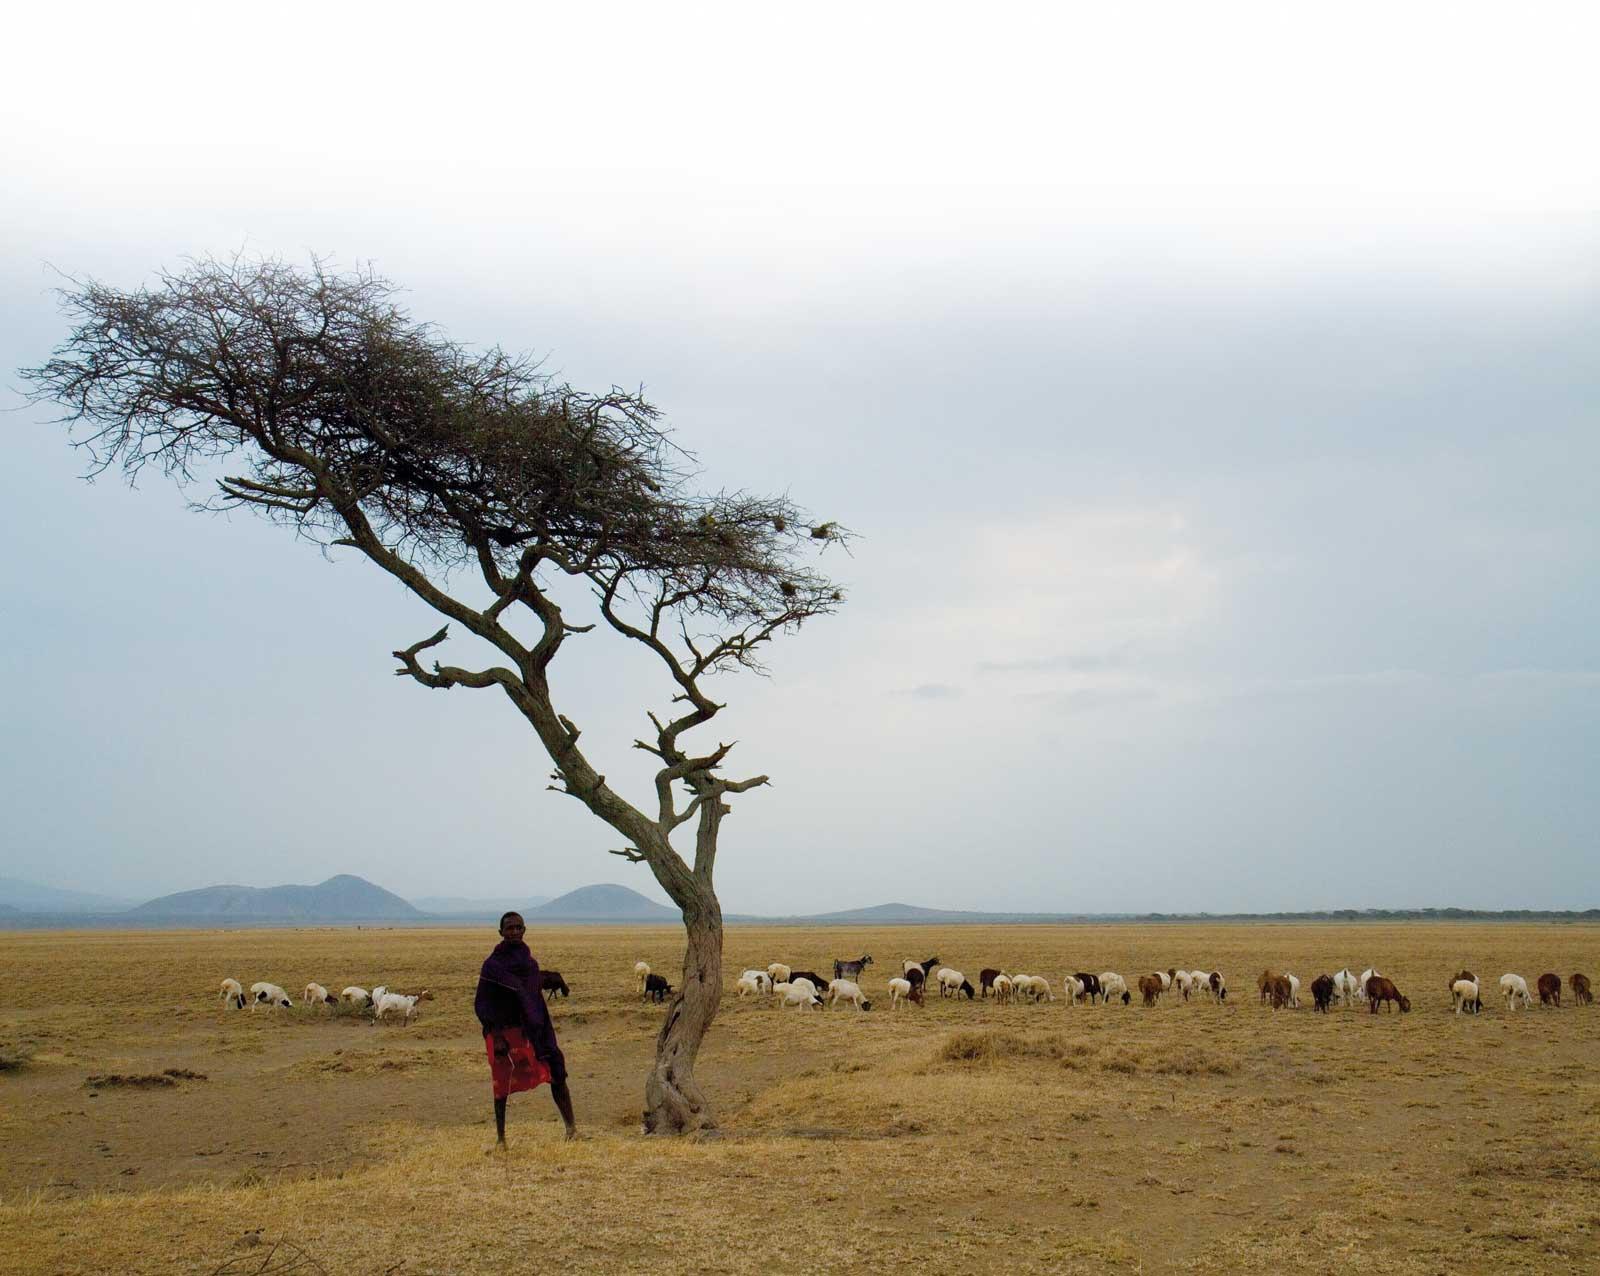 Boy herding goats on the plains. 